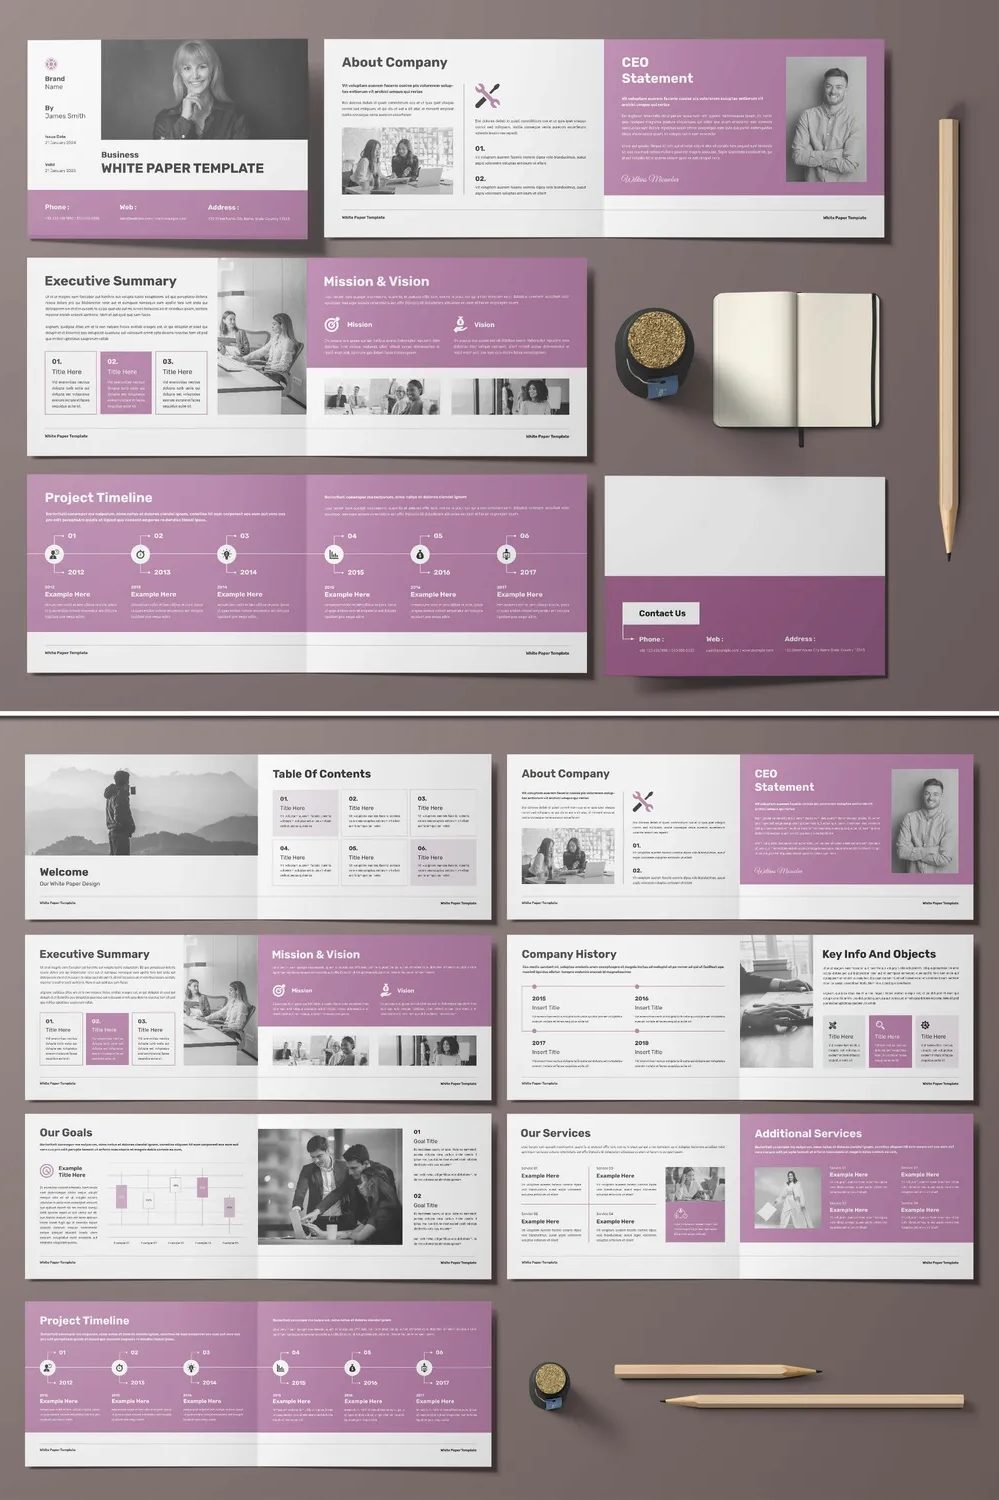 Adobestock - White Paper Template Brochure Design Layout Landscape 716694150